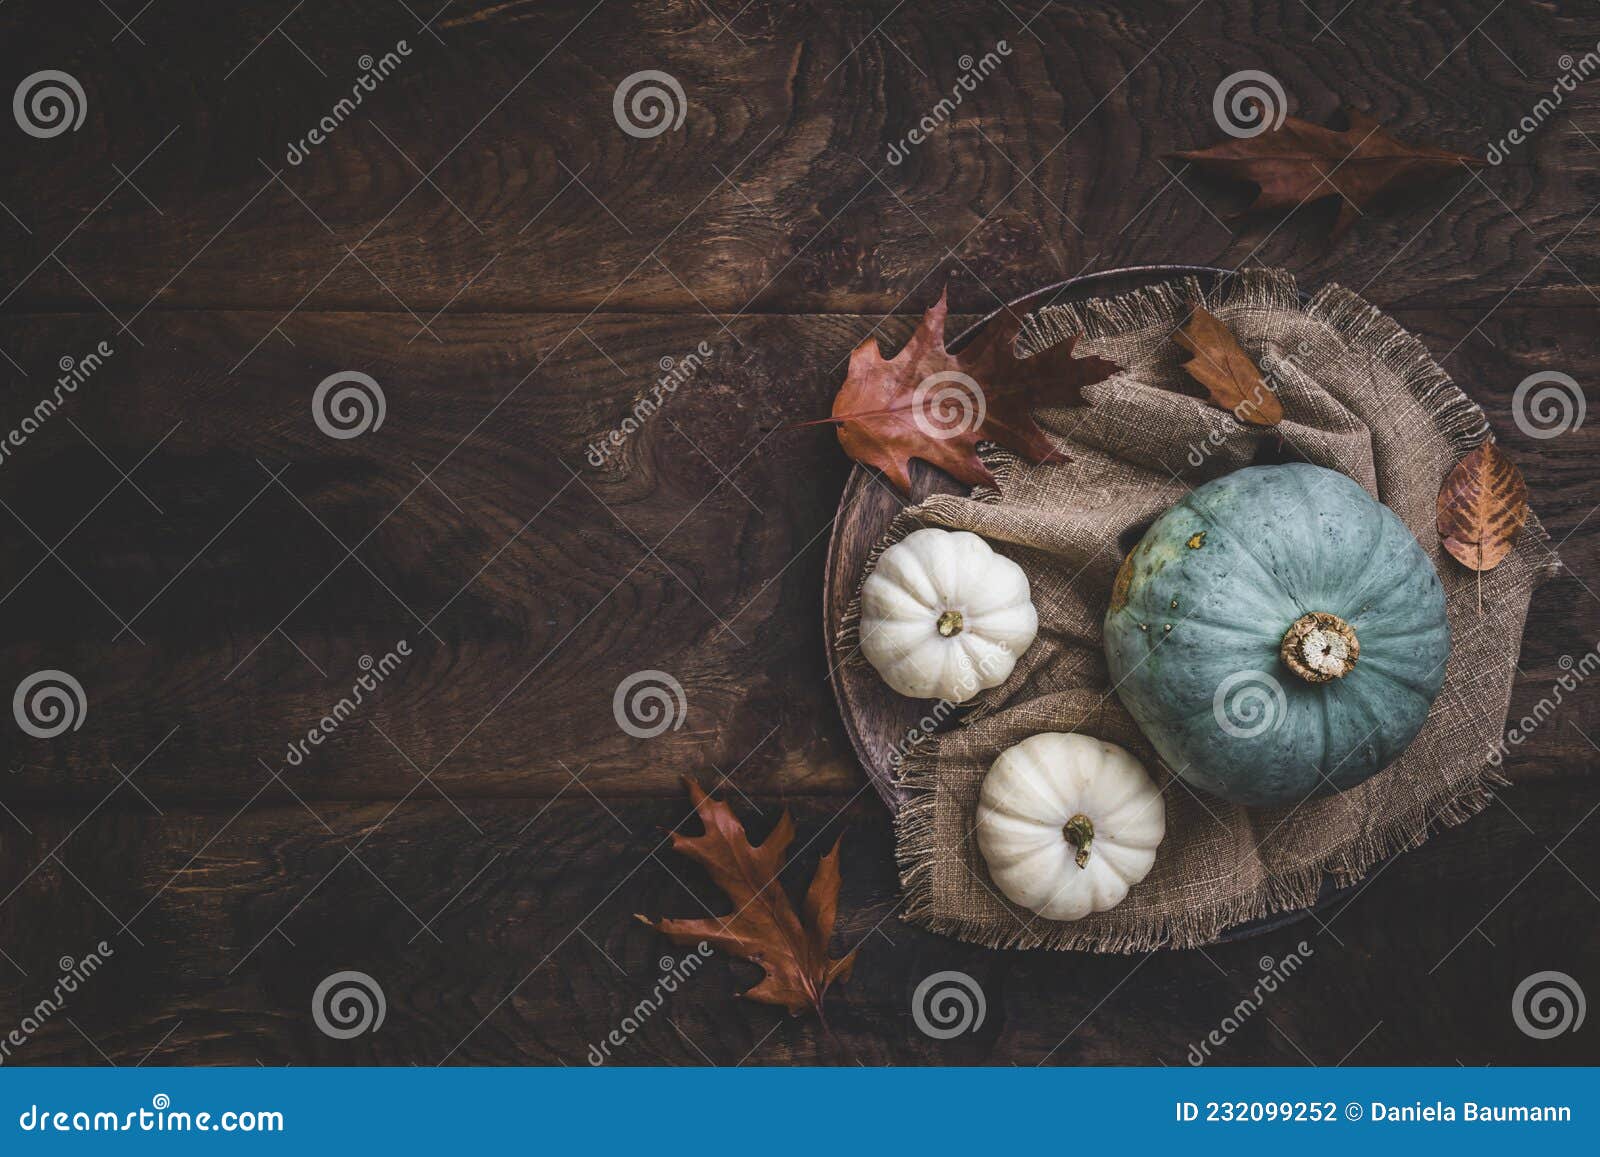 green sombra pumpkin and white mini pumpkins on wood, autumn decoration